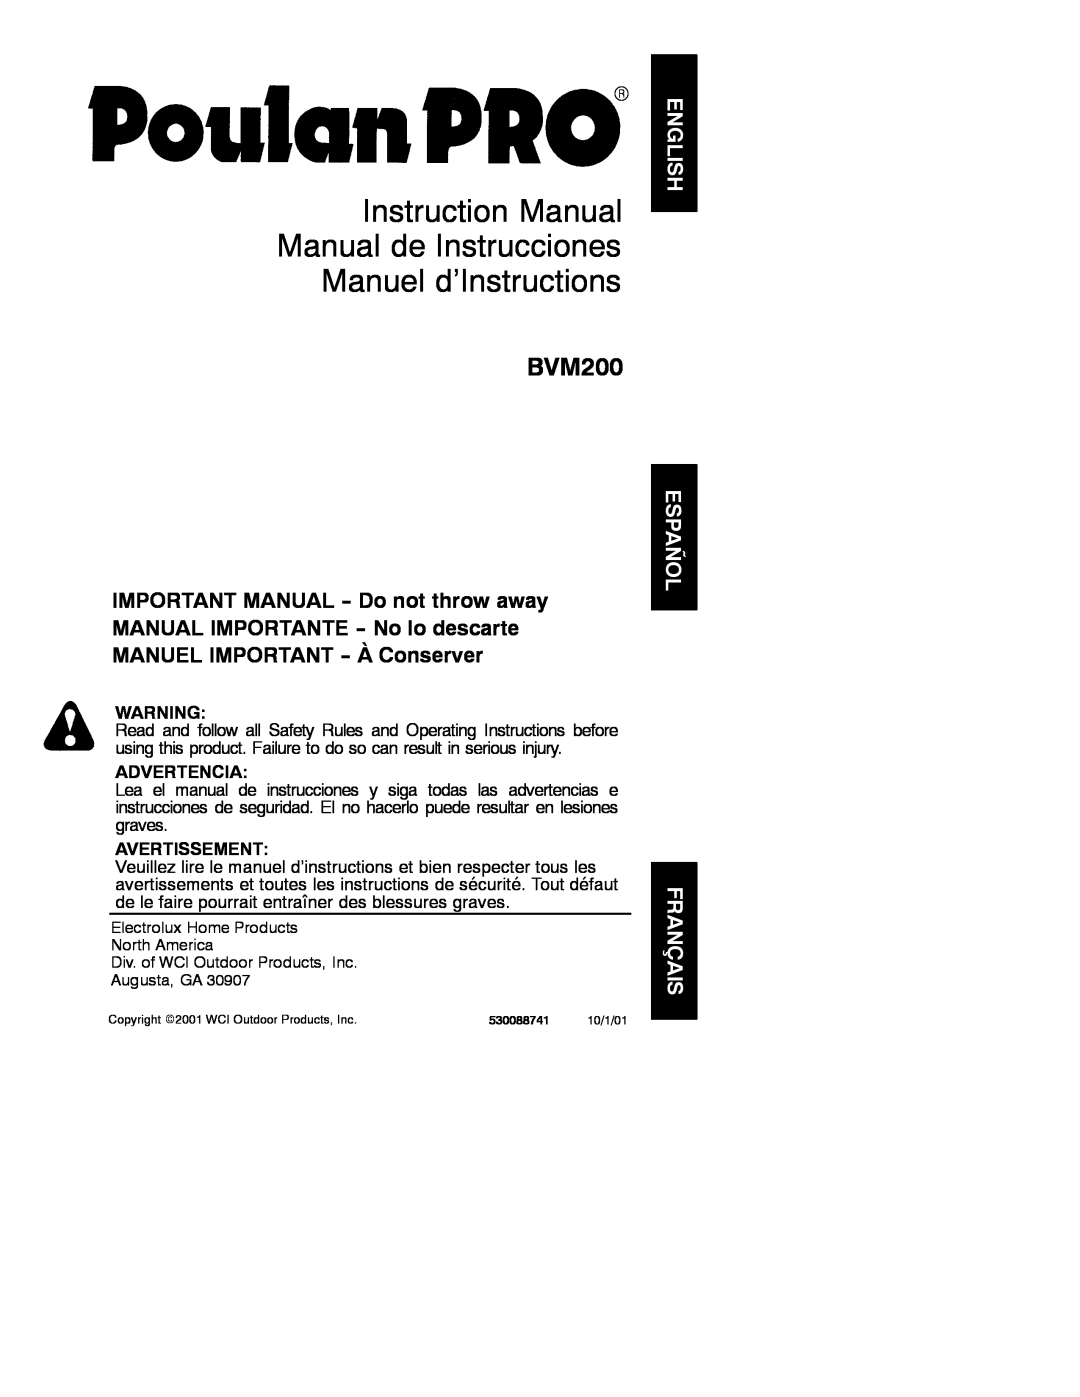 Electrolux BVM200 instruction manual Advertencia, Avertissement 